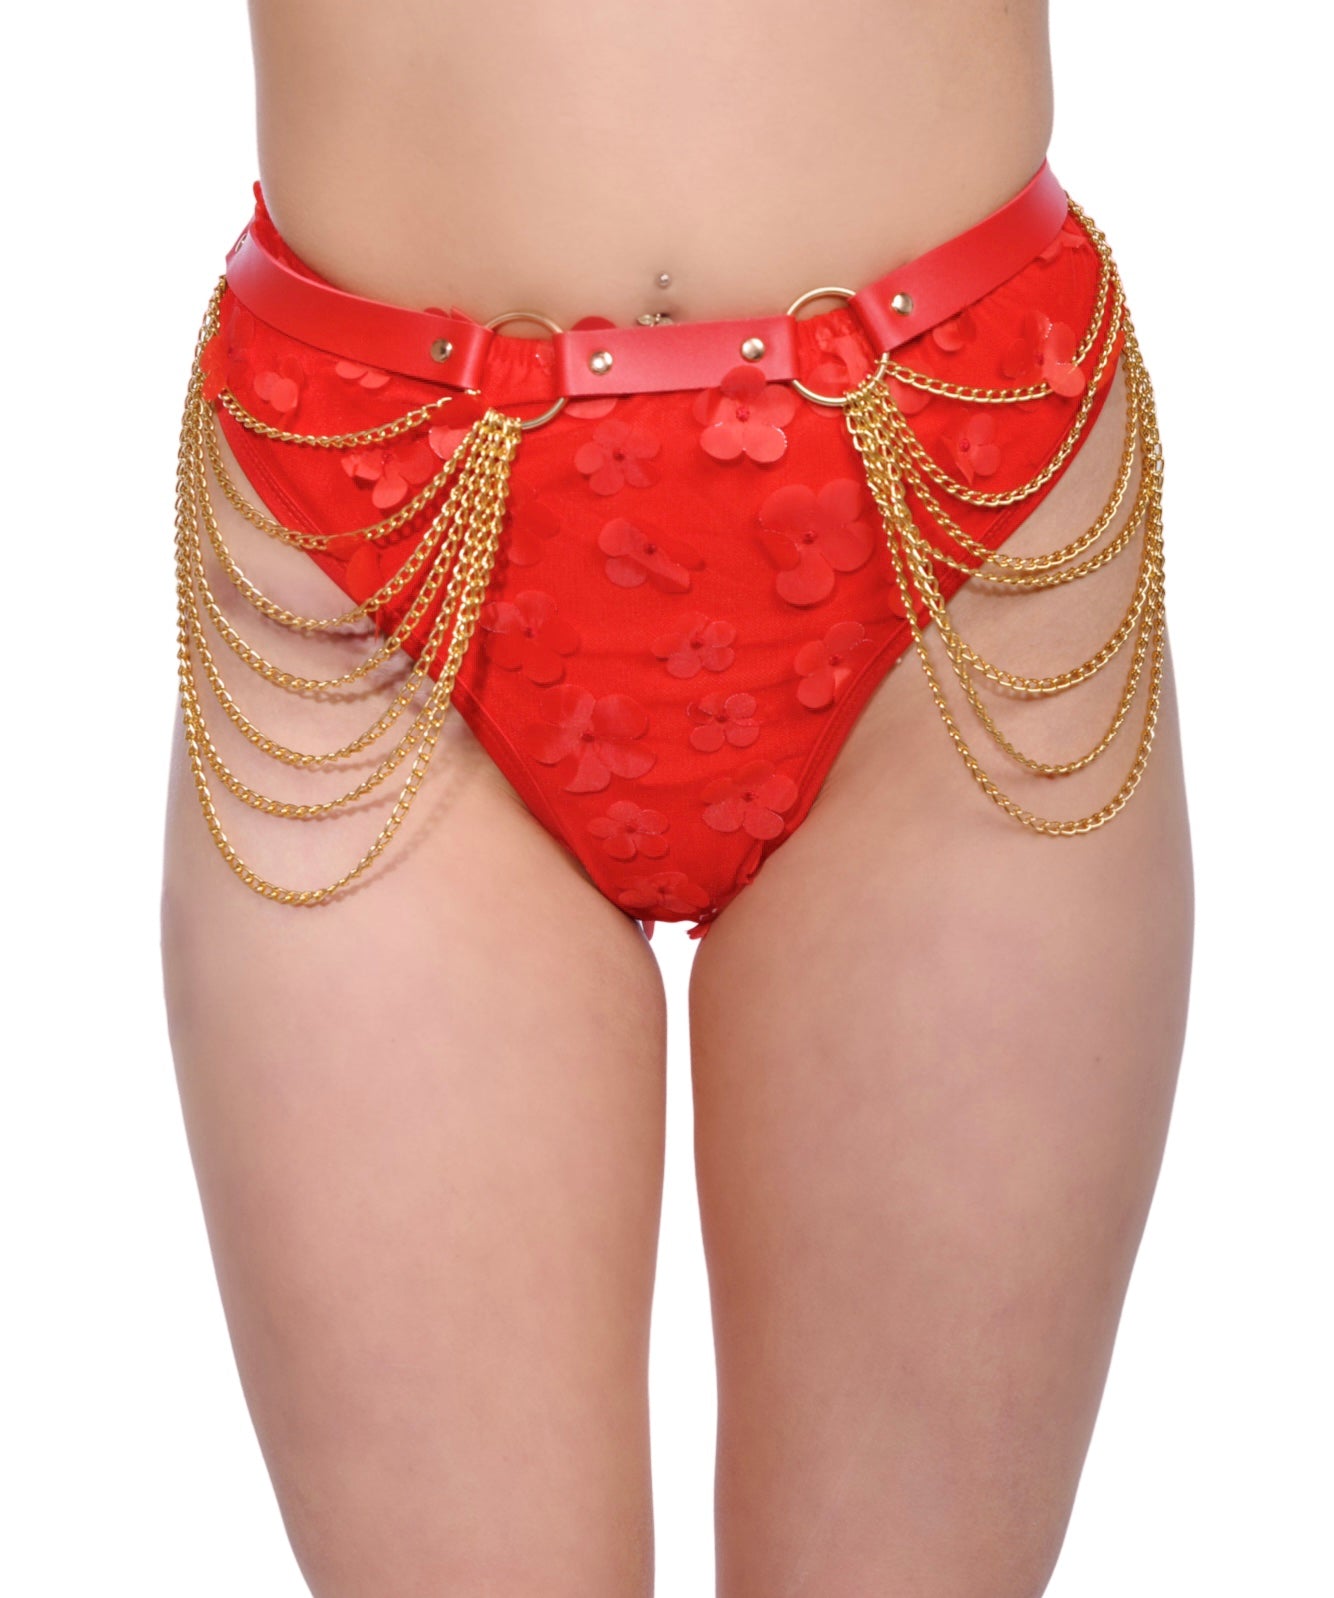 Red/Gold Harness Belt